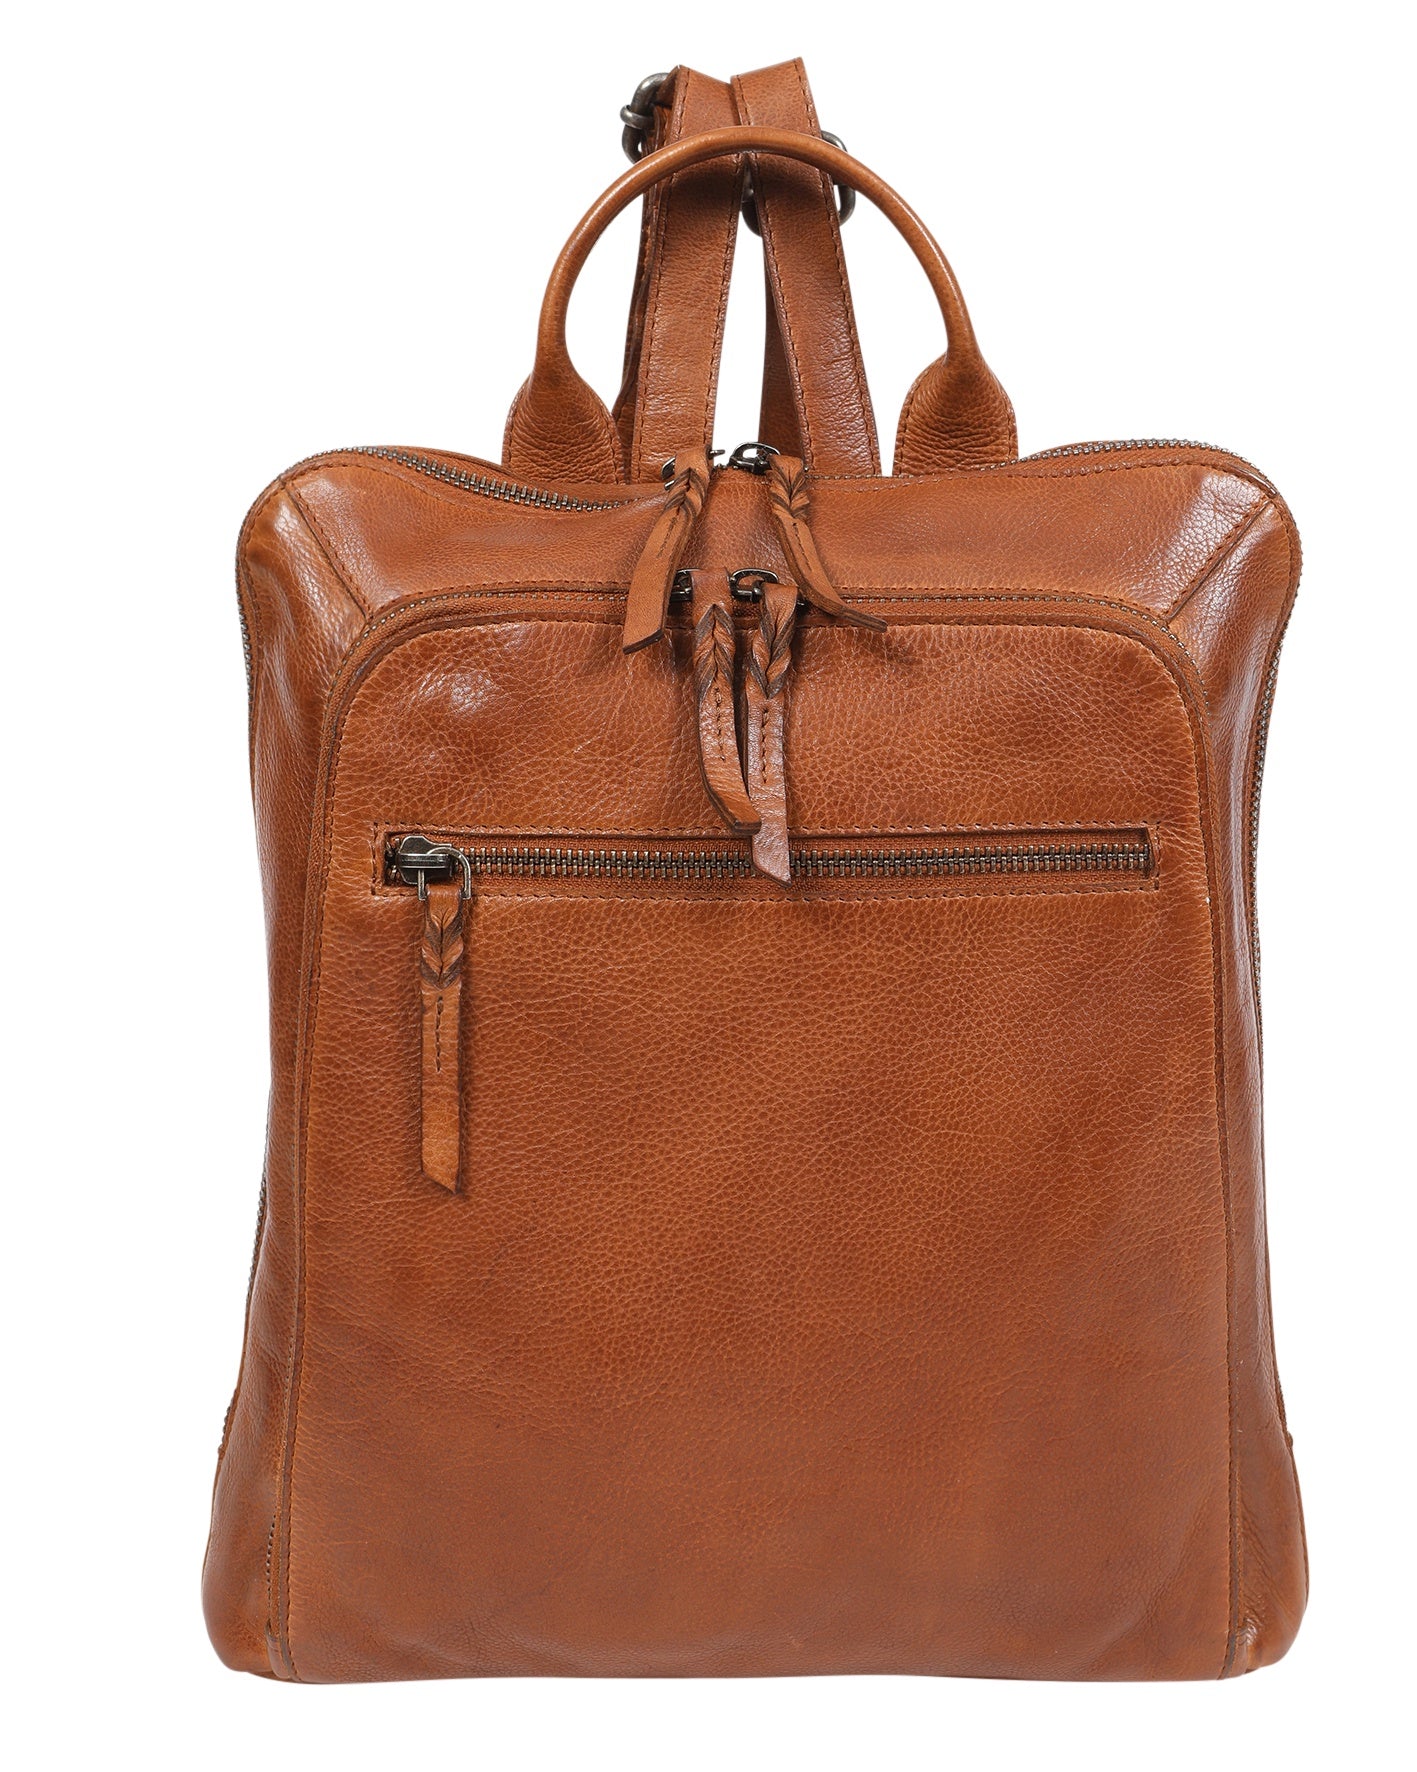 Modapelle - Soft Cow Leather Ladies Double Zip Comp Bag in Tan | Moda7705